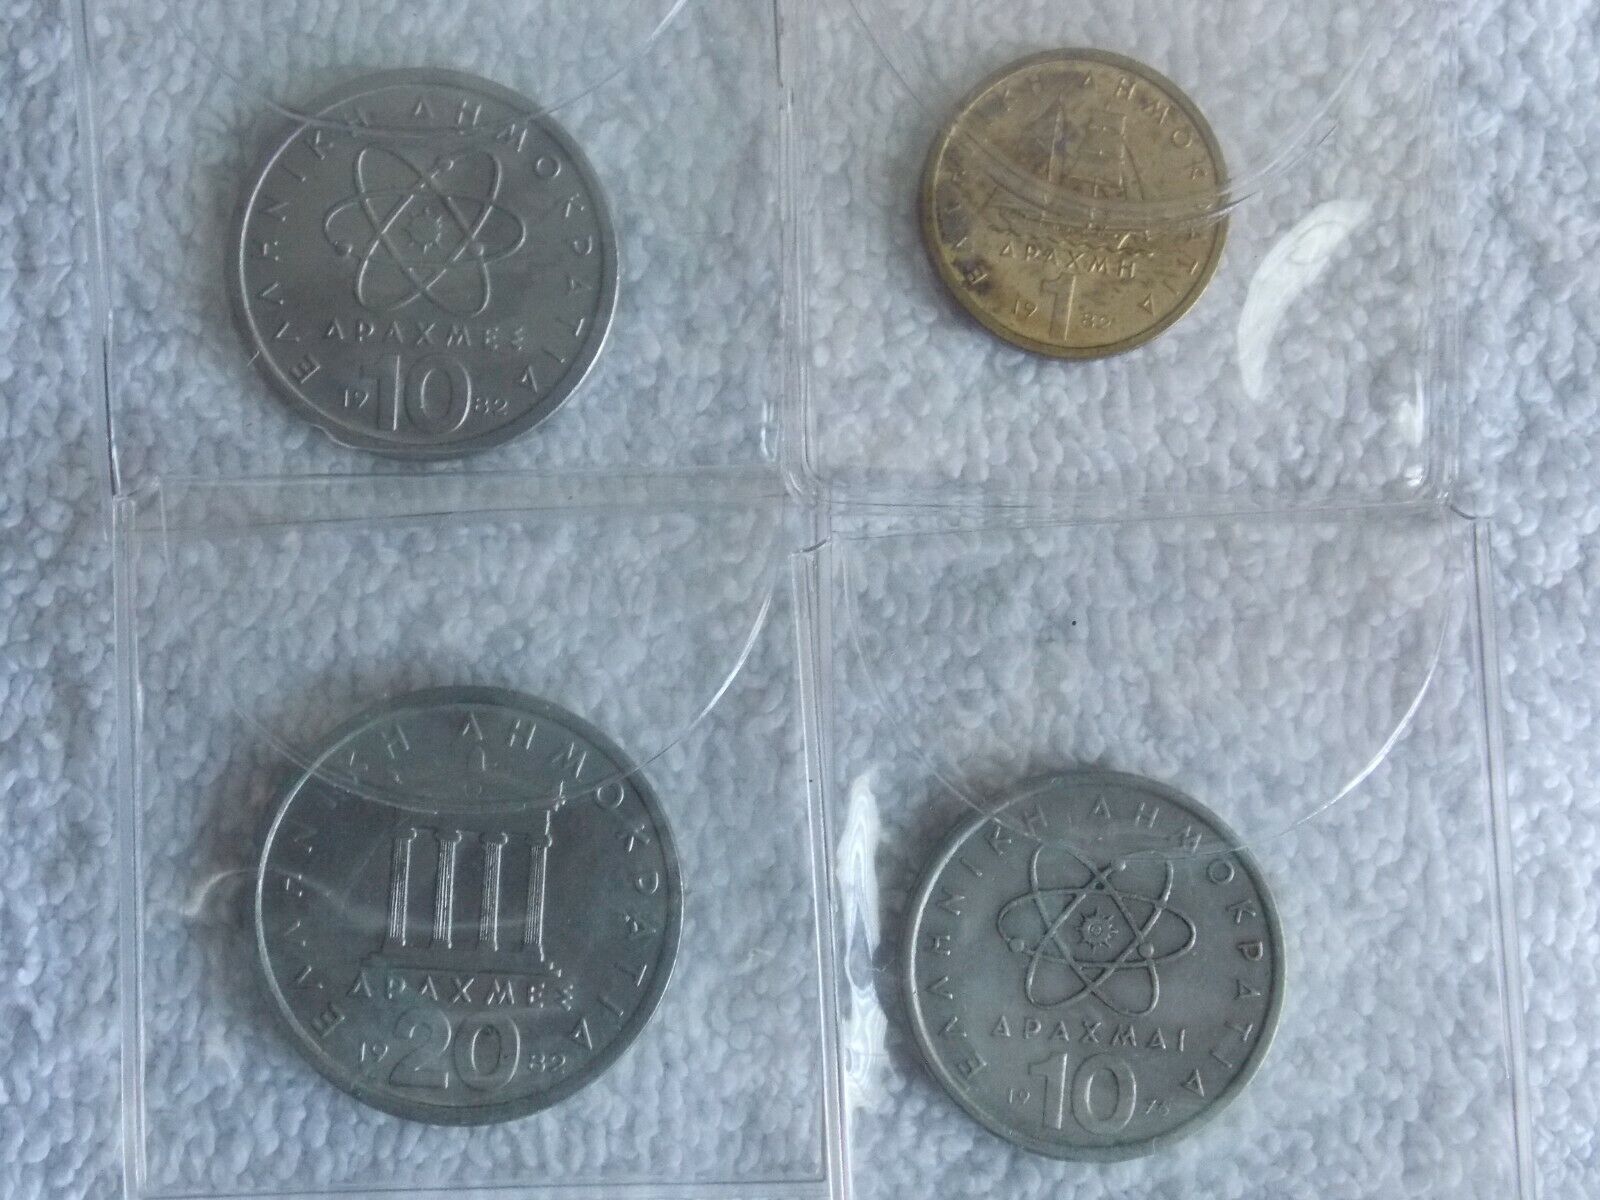 Greece minor coins Без бренда - фотография #6